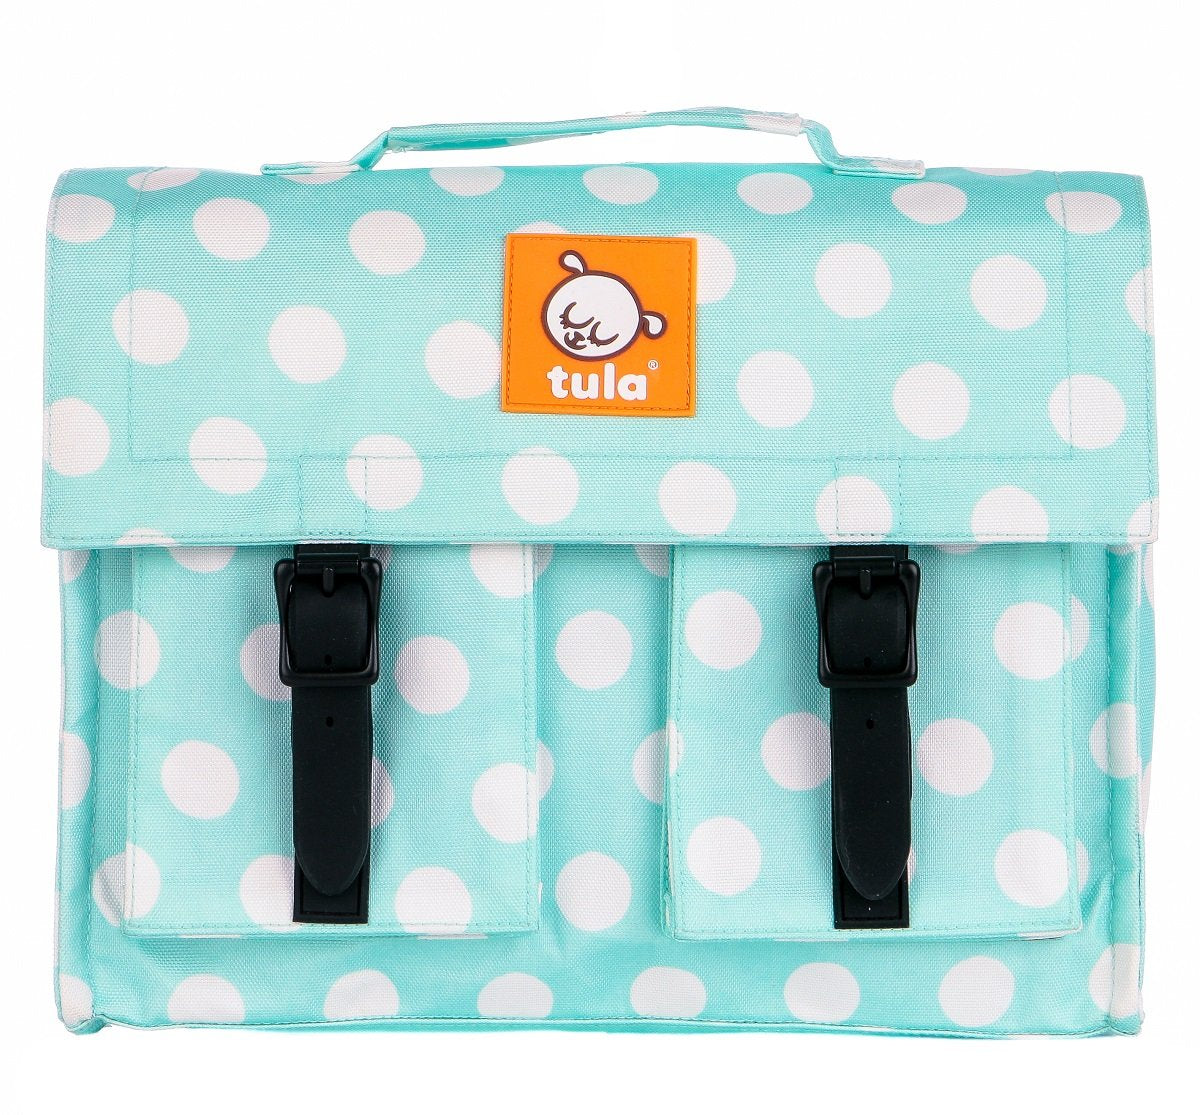 Mint Candy Dots - Cartable Tula pour enfants - Baby Tula